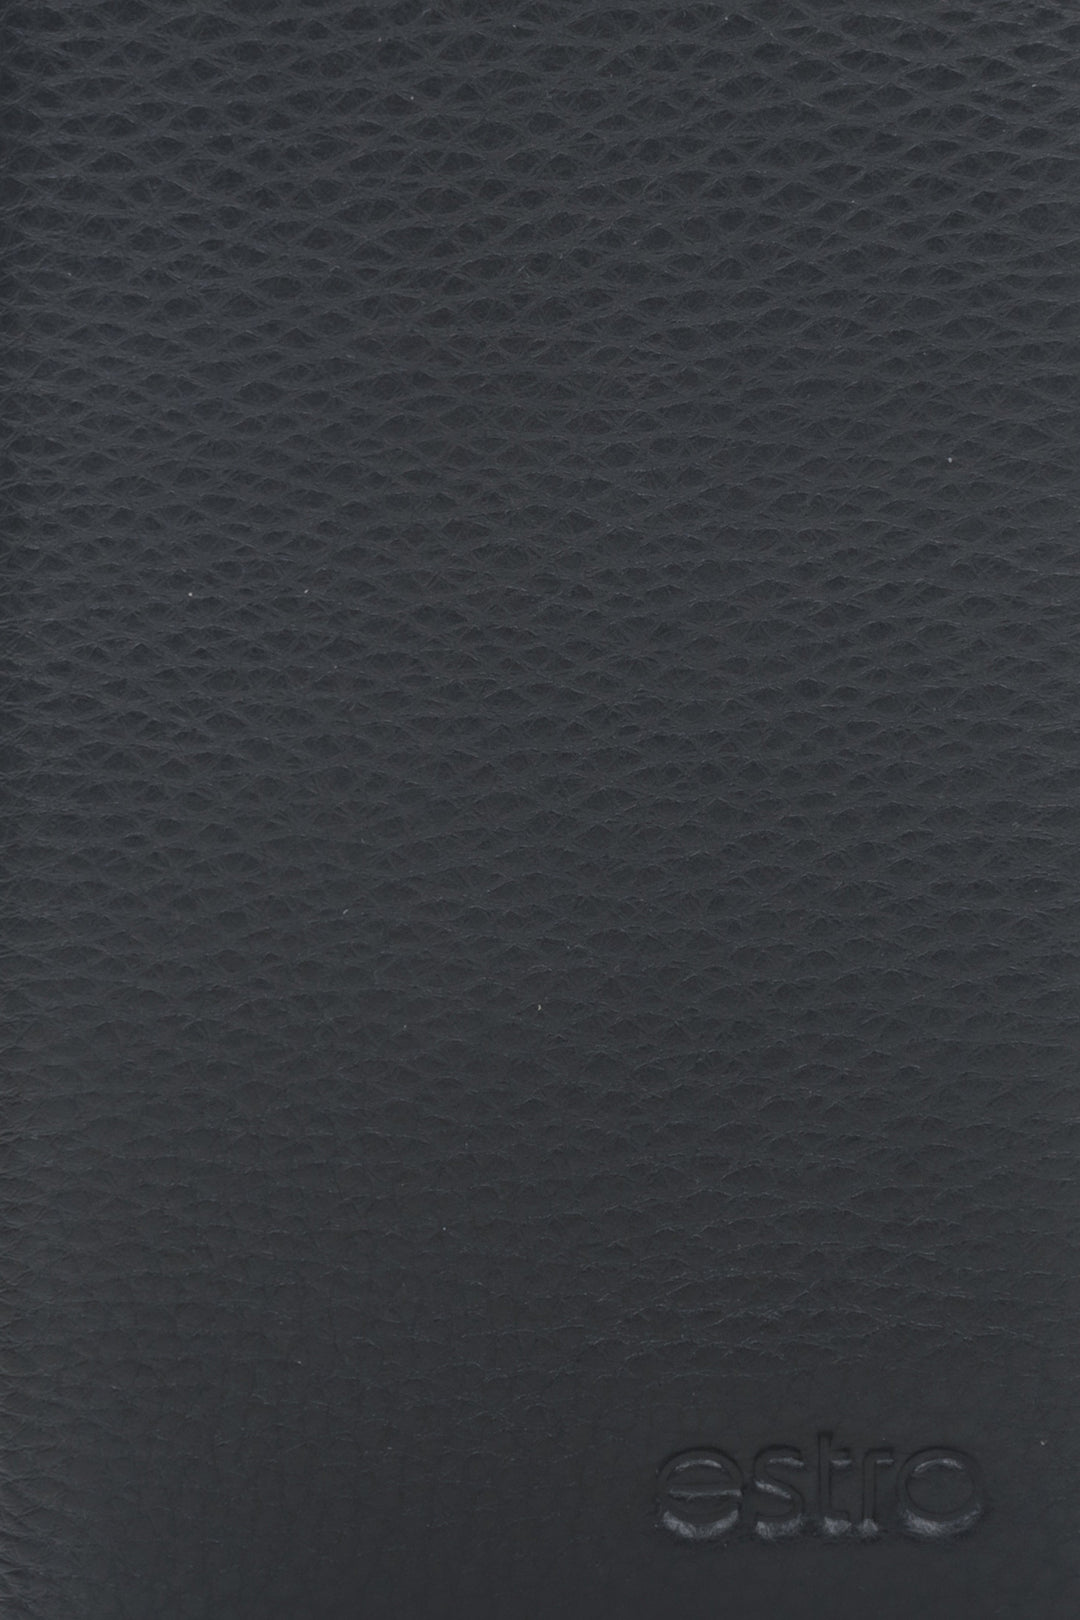 Estro men's black leather  wallet - close-up on details.